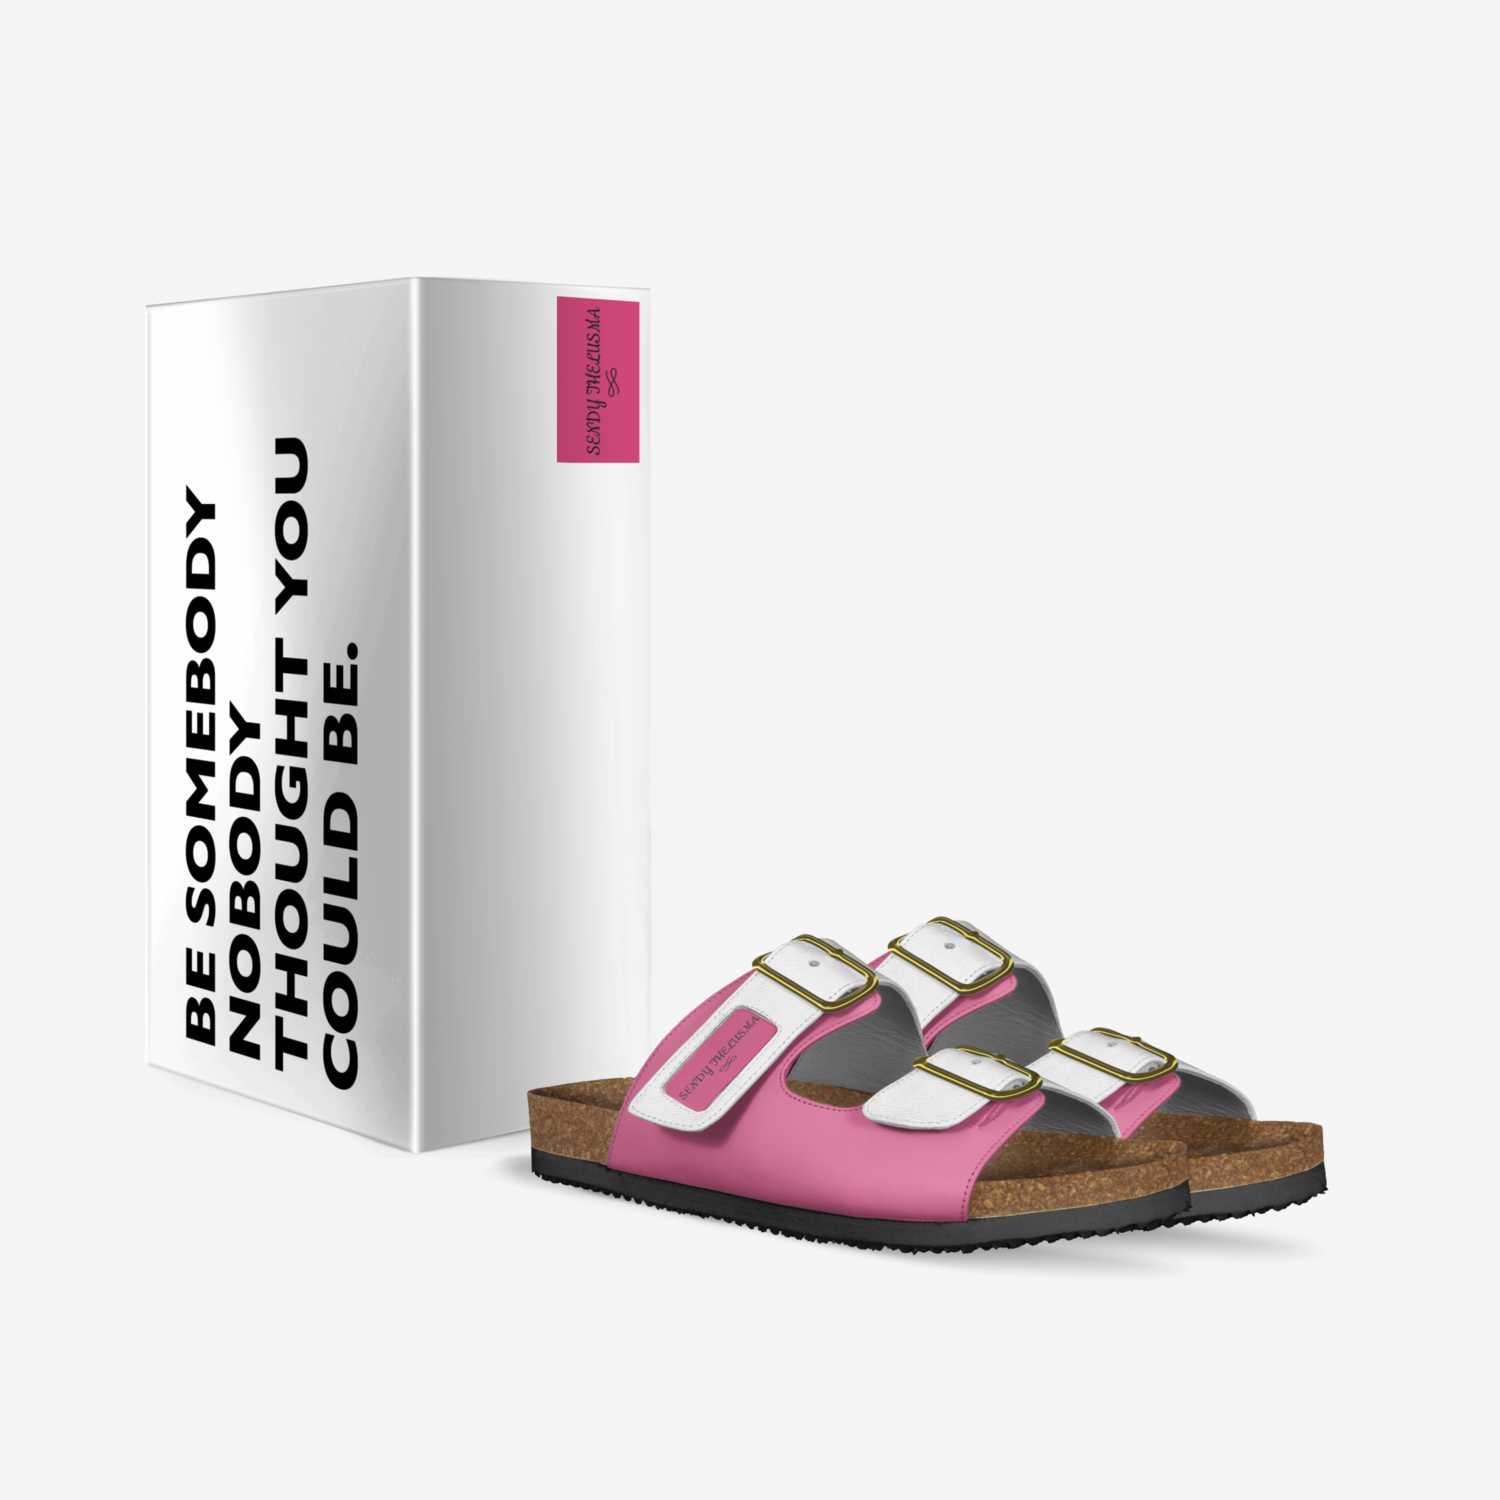 SENDY THELUSMA custom made in Italy shoes by Sendy Sendy Thelusma | Box view